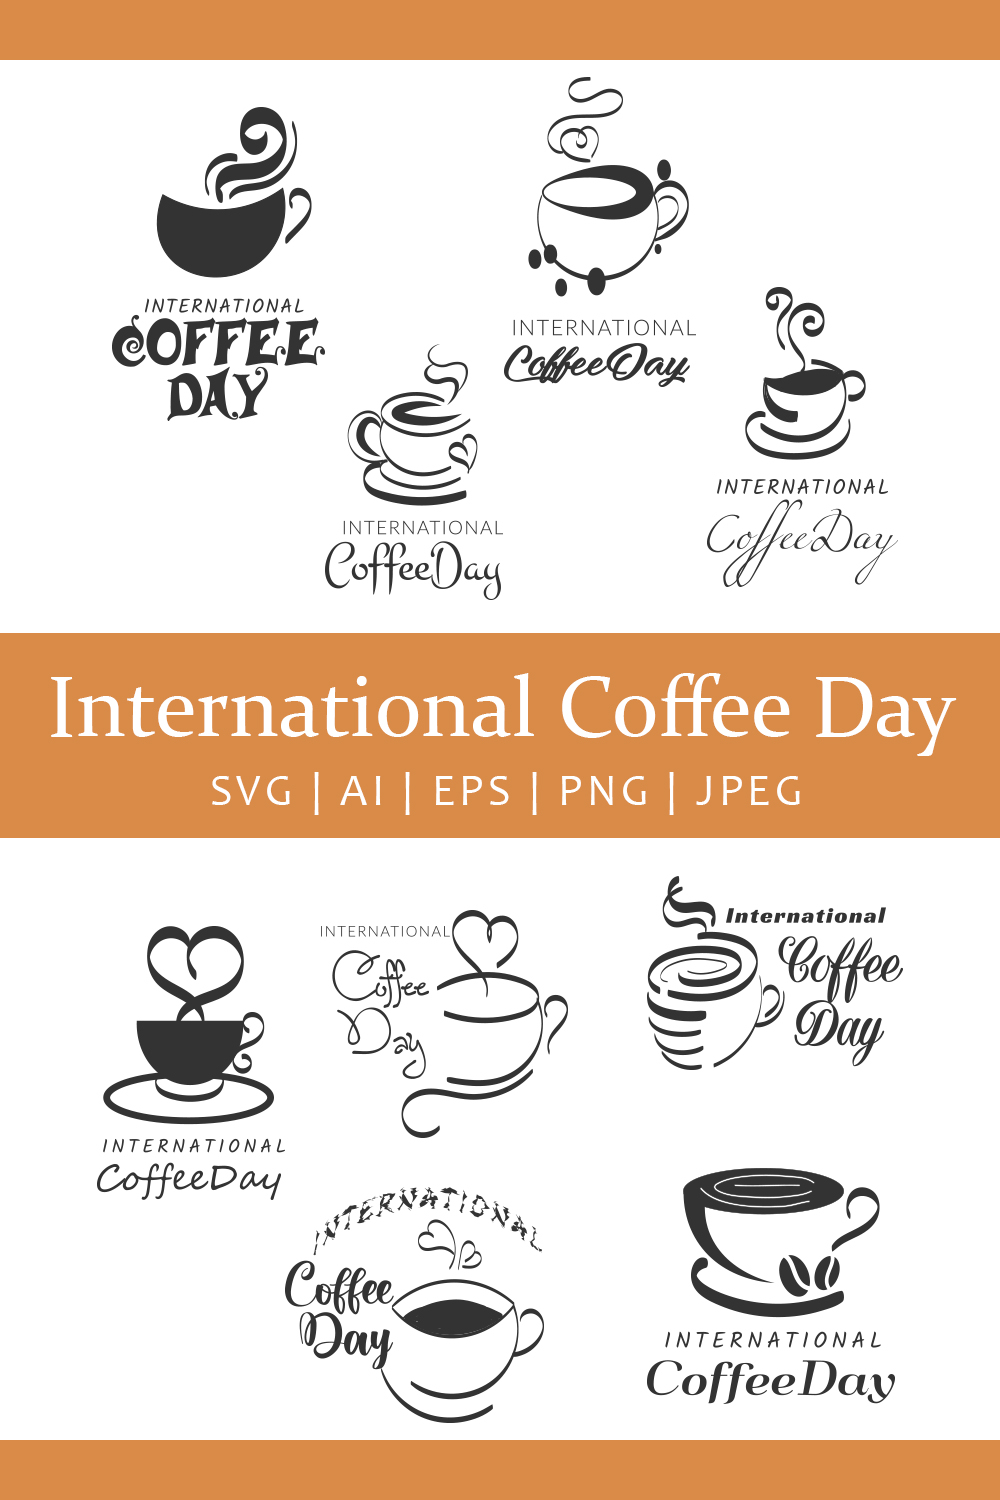 9 Happy International Day Of Coffee Pinterest Image.